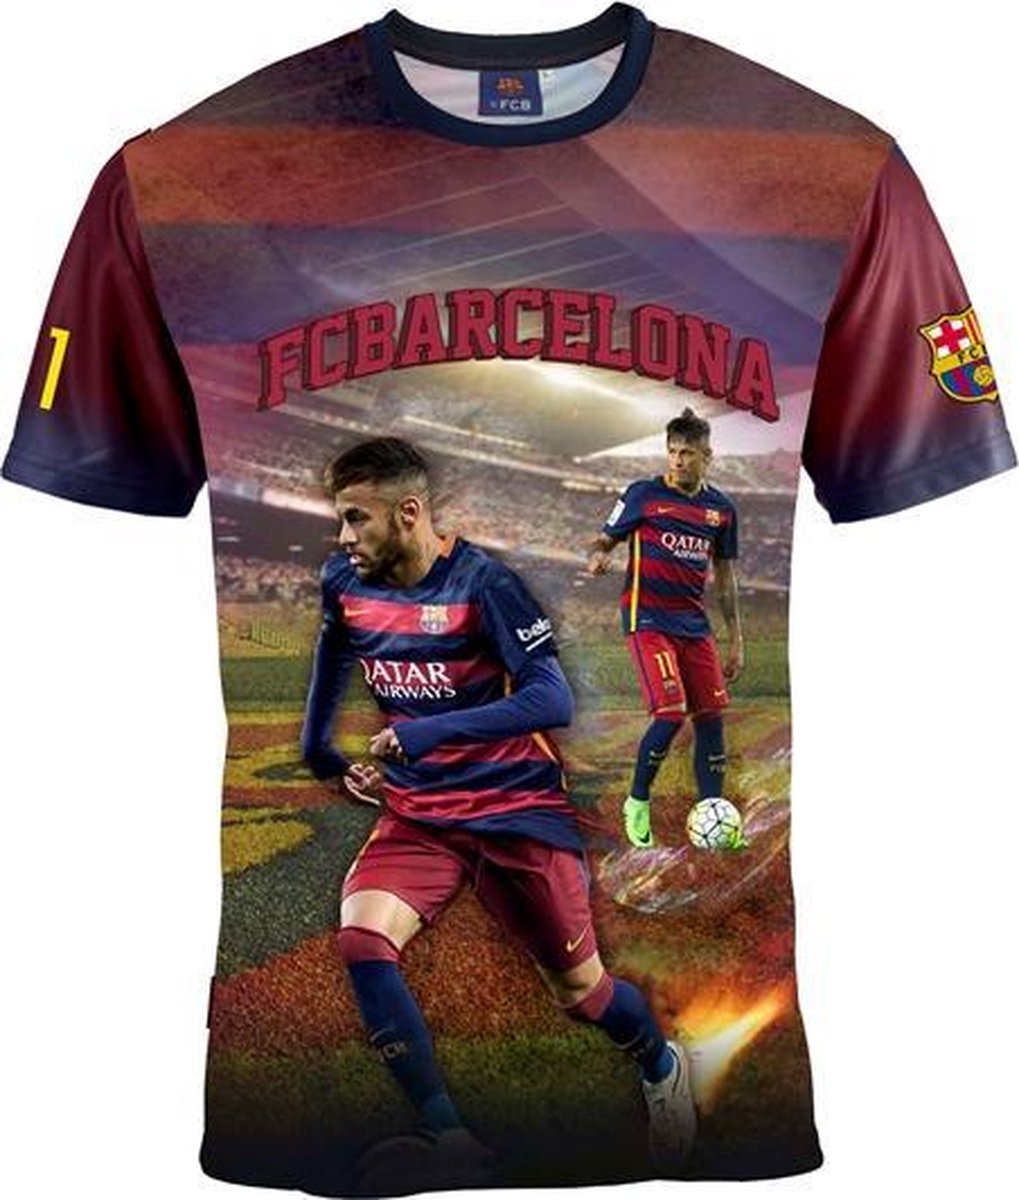 T-shirt barcelona maat 104 | bol.com